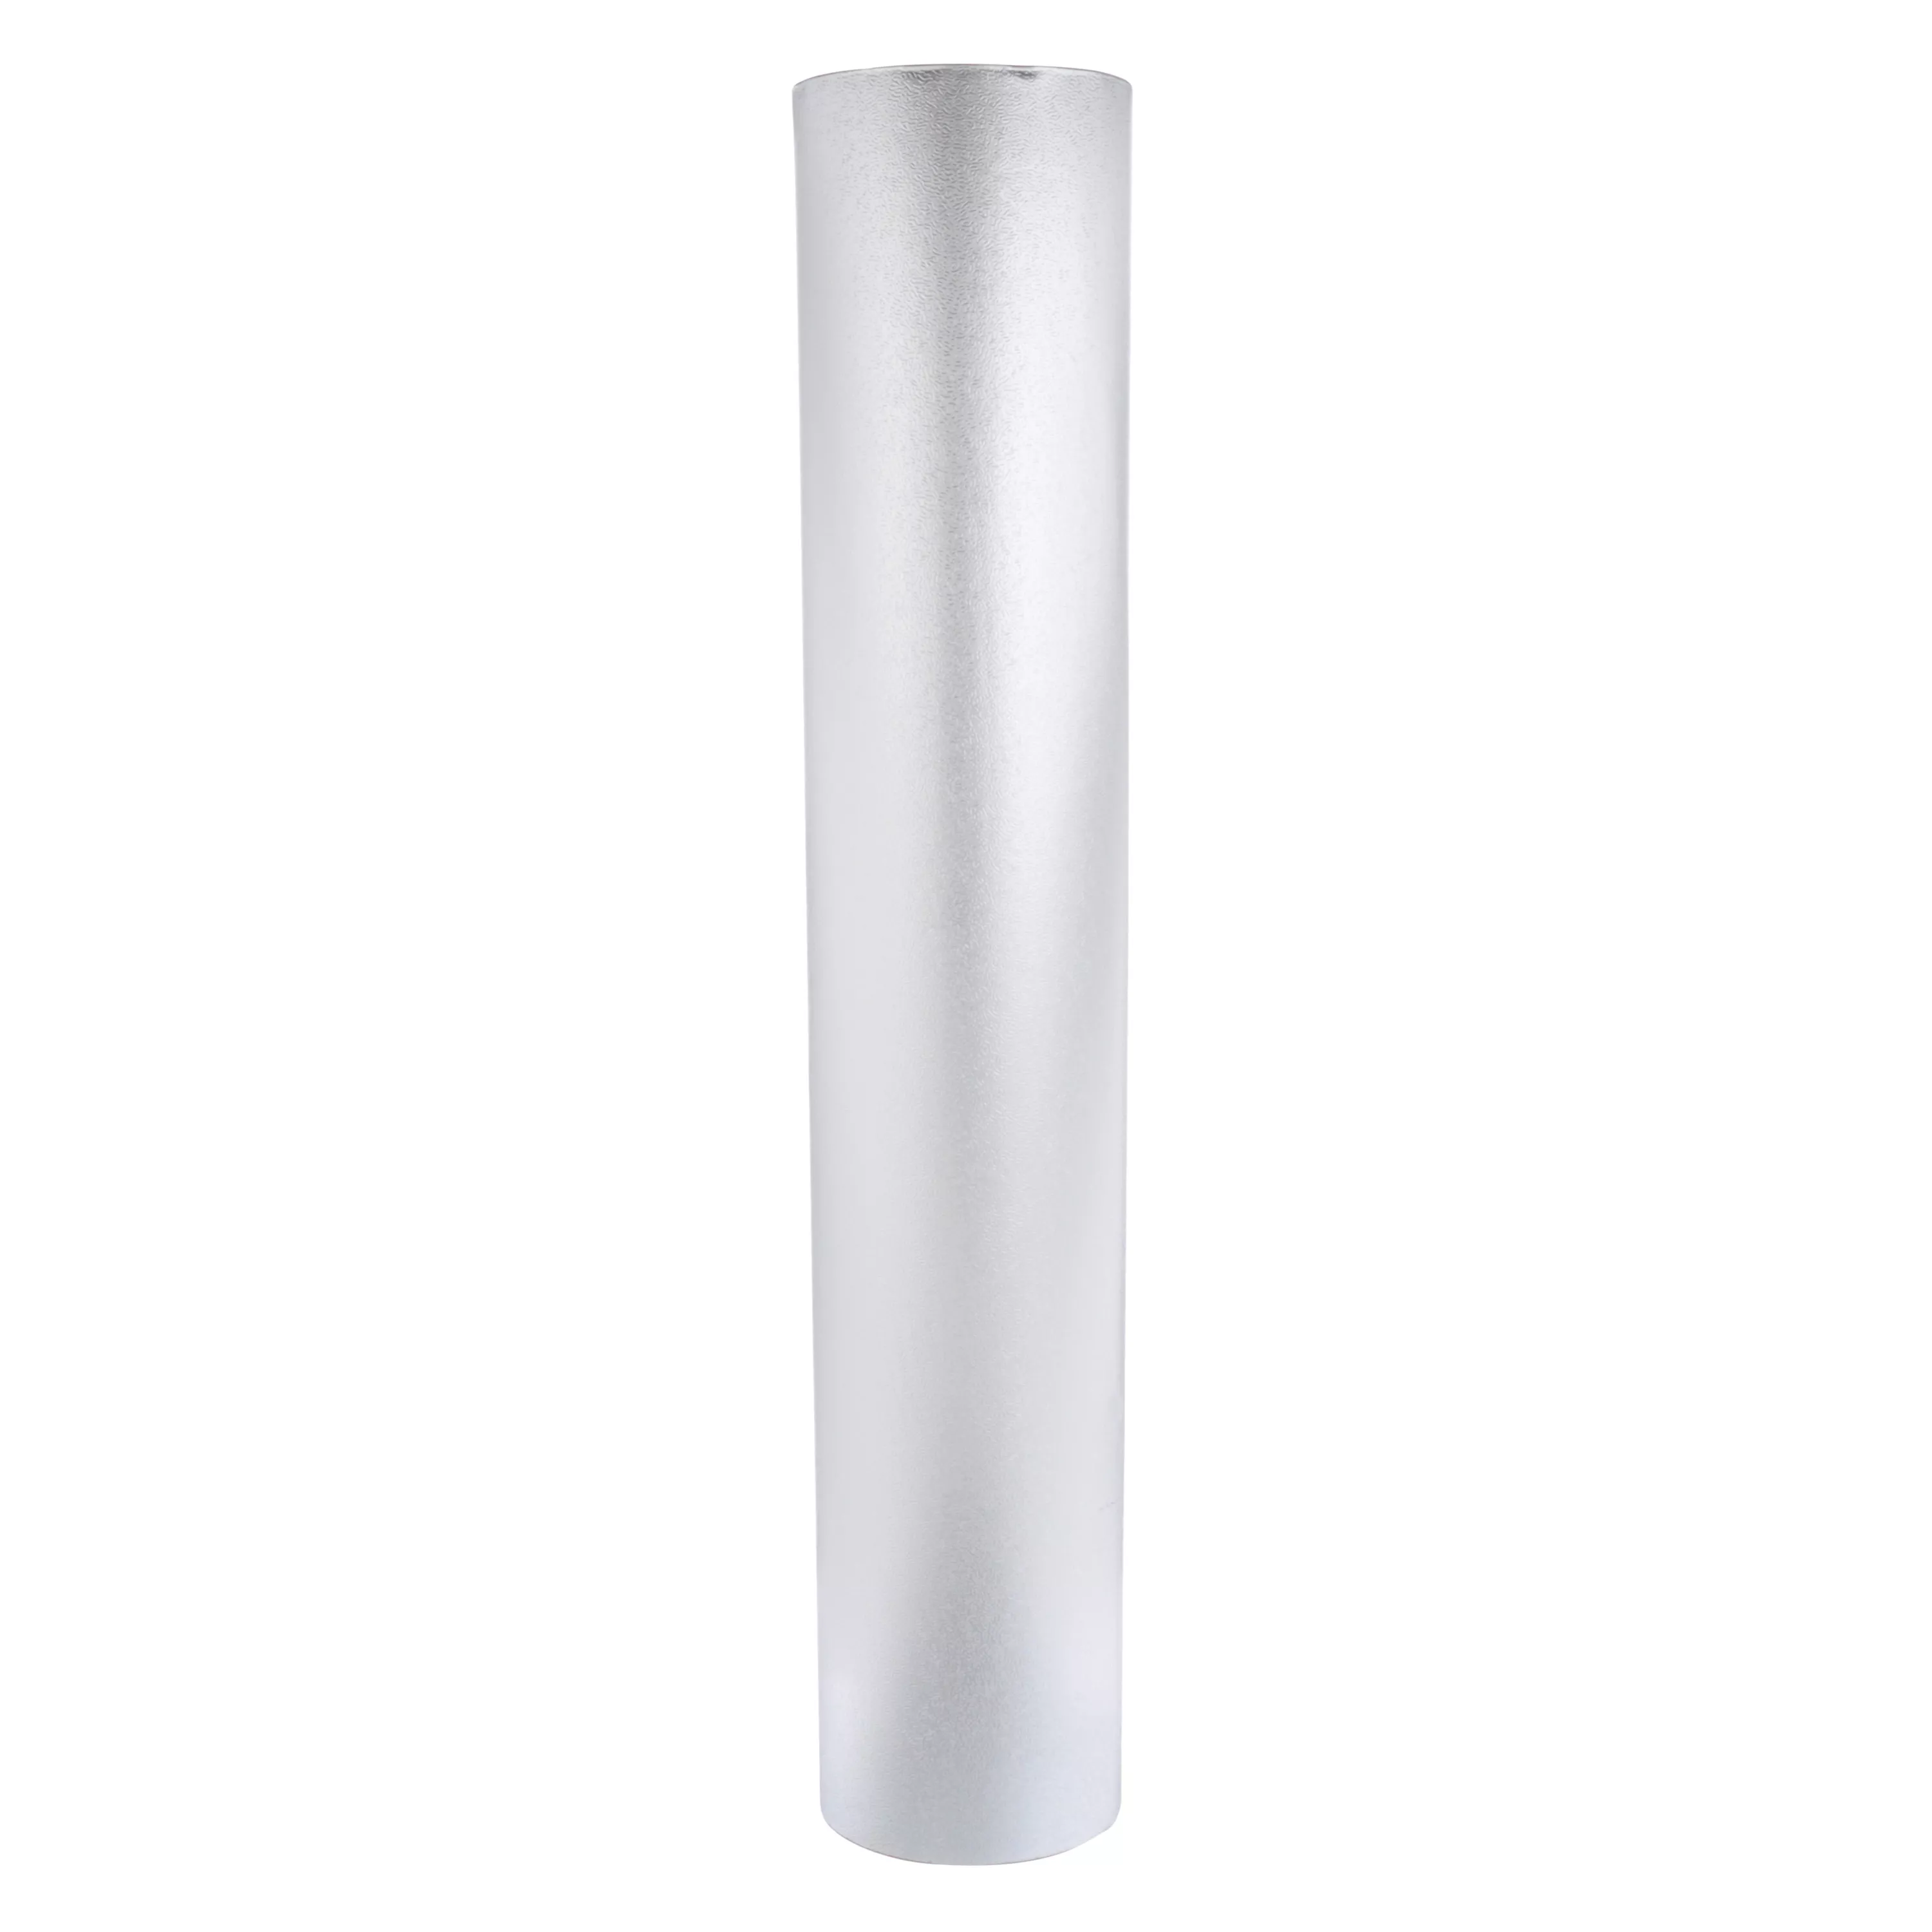 3M™ VentureClad™ Insulation Jacketing Tape 1577CW-E, Silver, 35.5 in x
50 yd, 1 Roll/Case